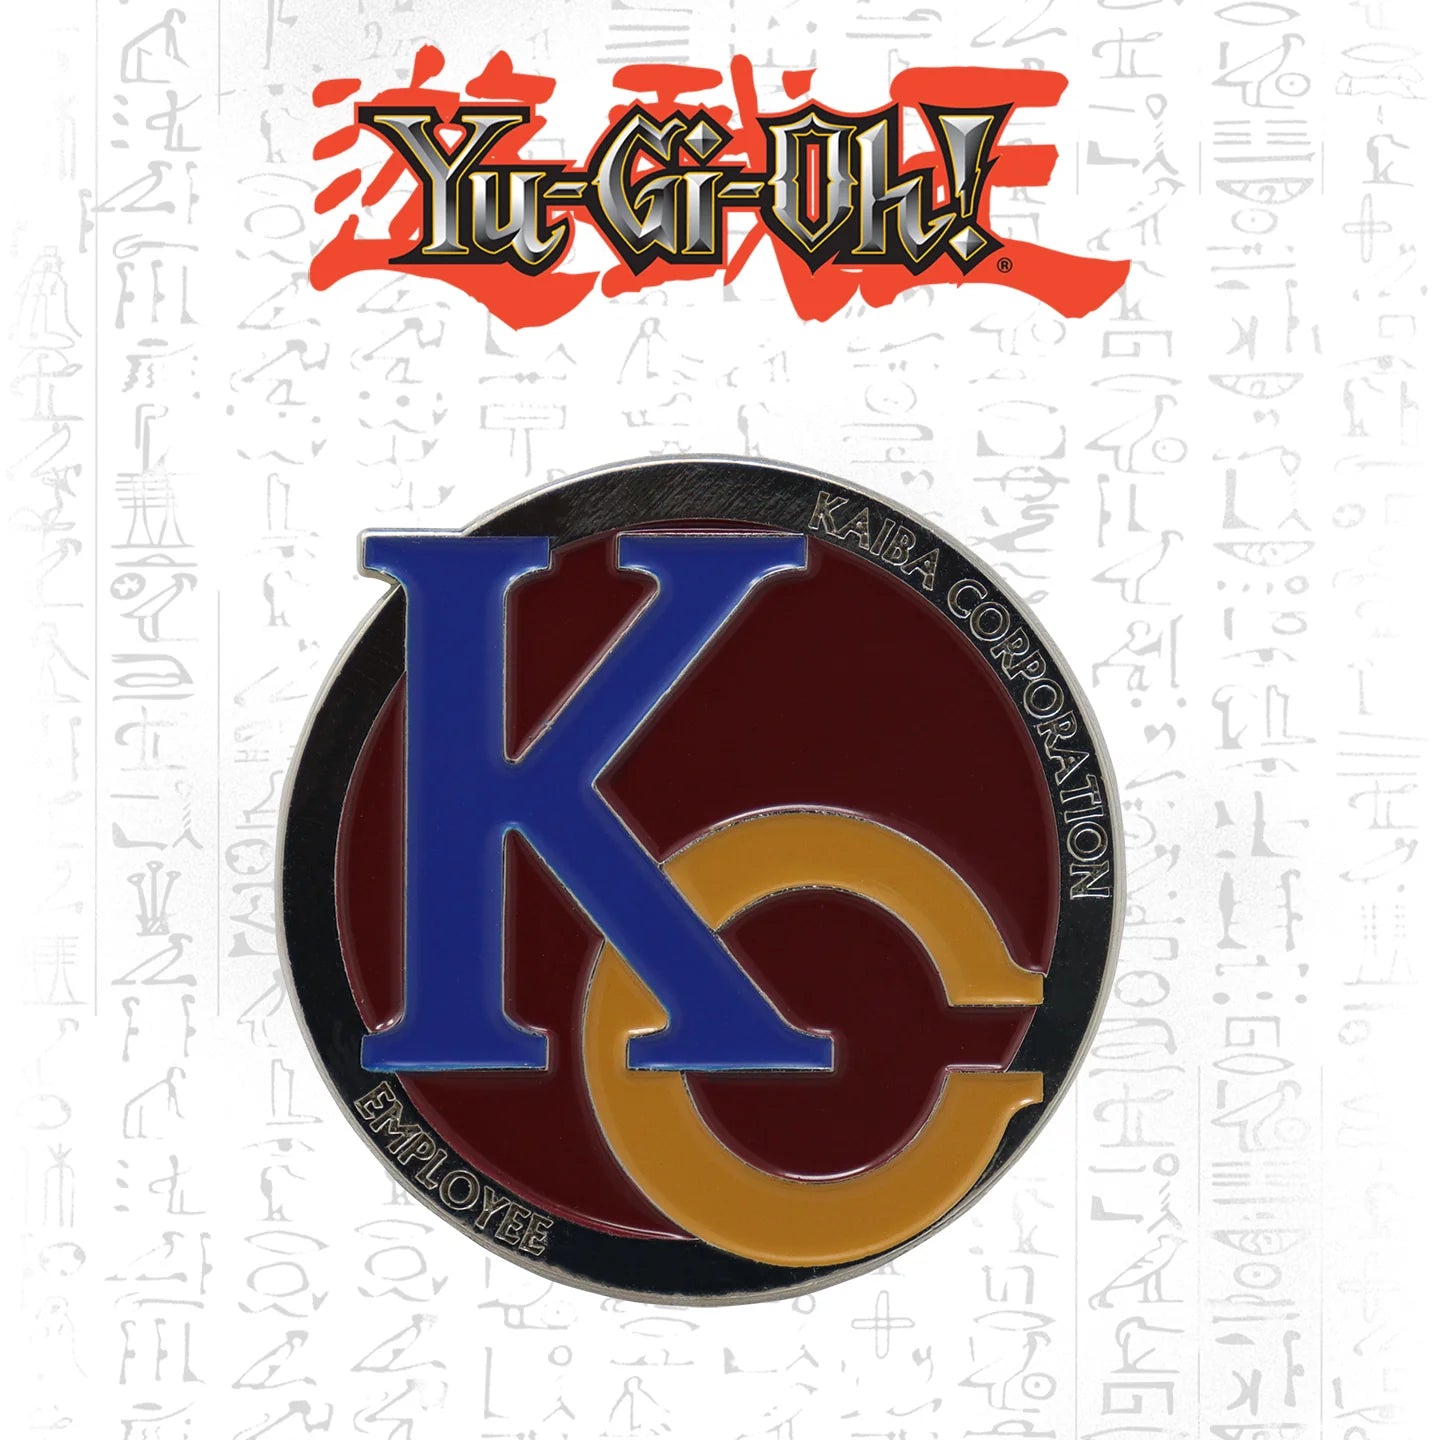 Yu-Gi-Oh! Limited Edition Kaiba Corp Pin Badge moon